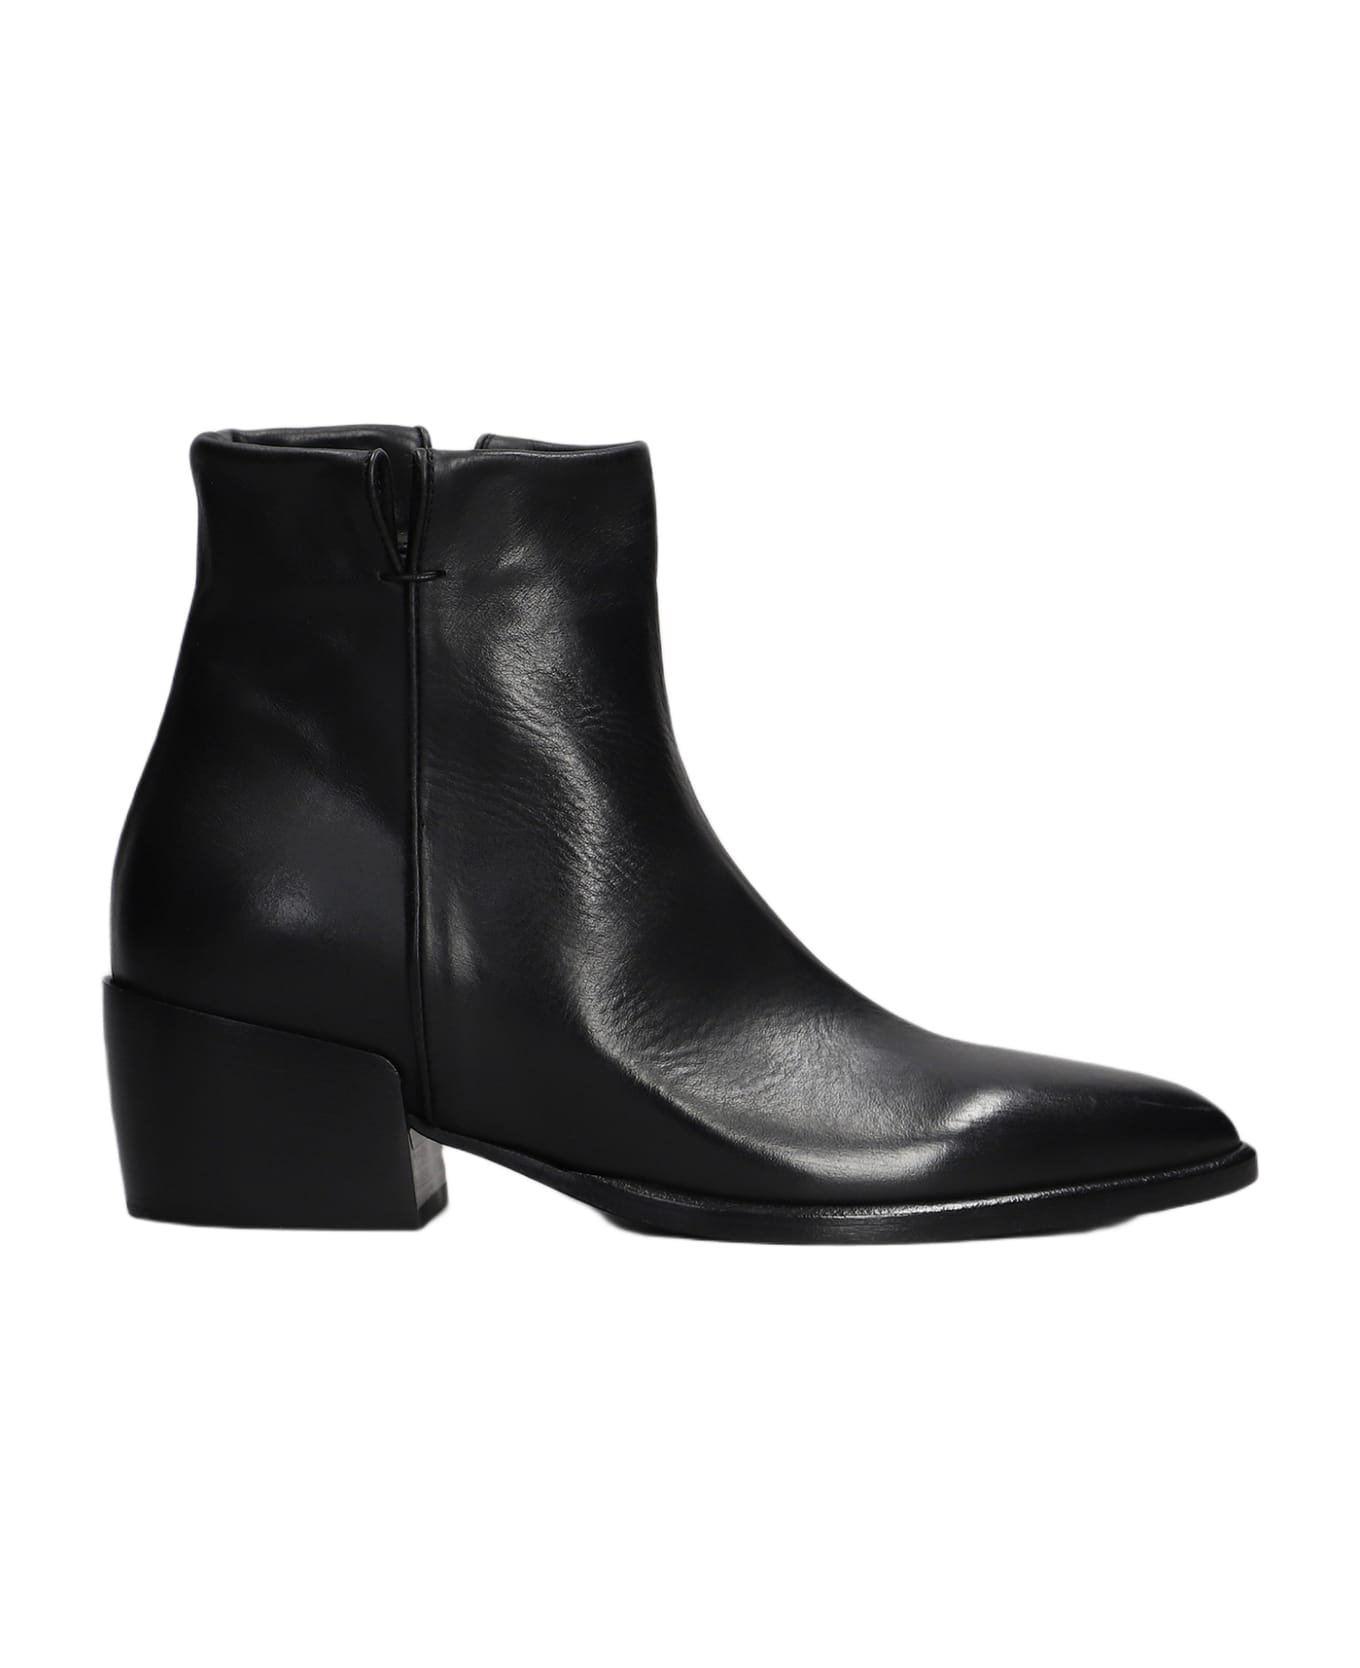 Elena Iachi Texan Ankle Boots In Black Leather - black ブーツ